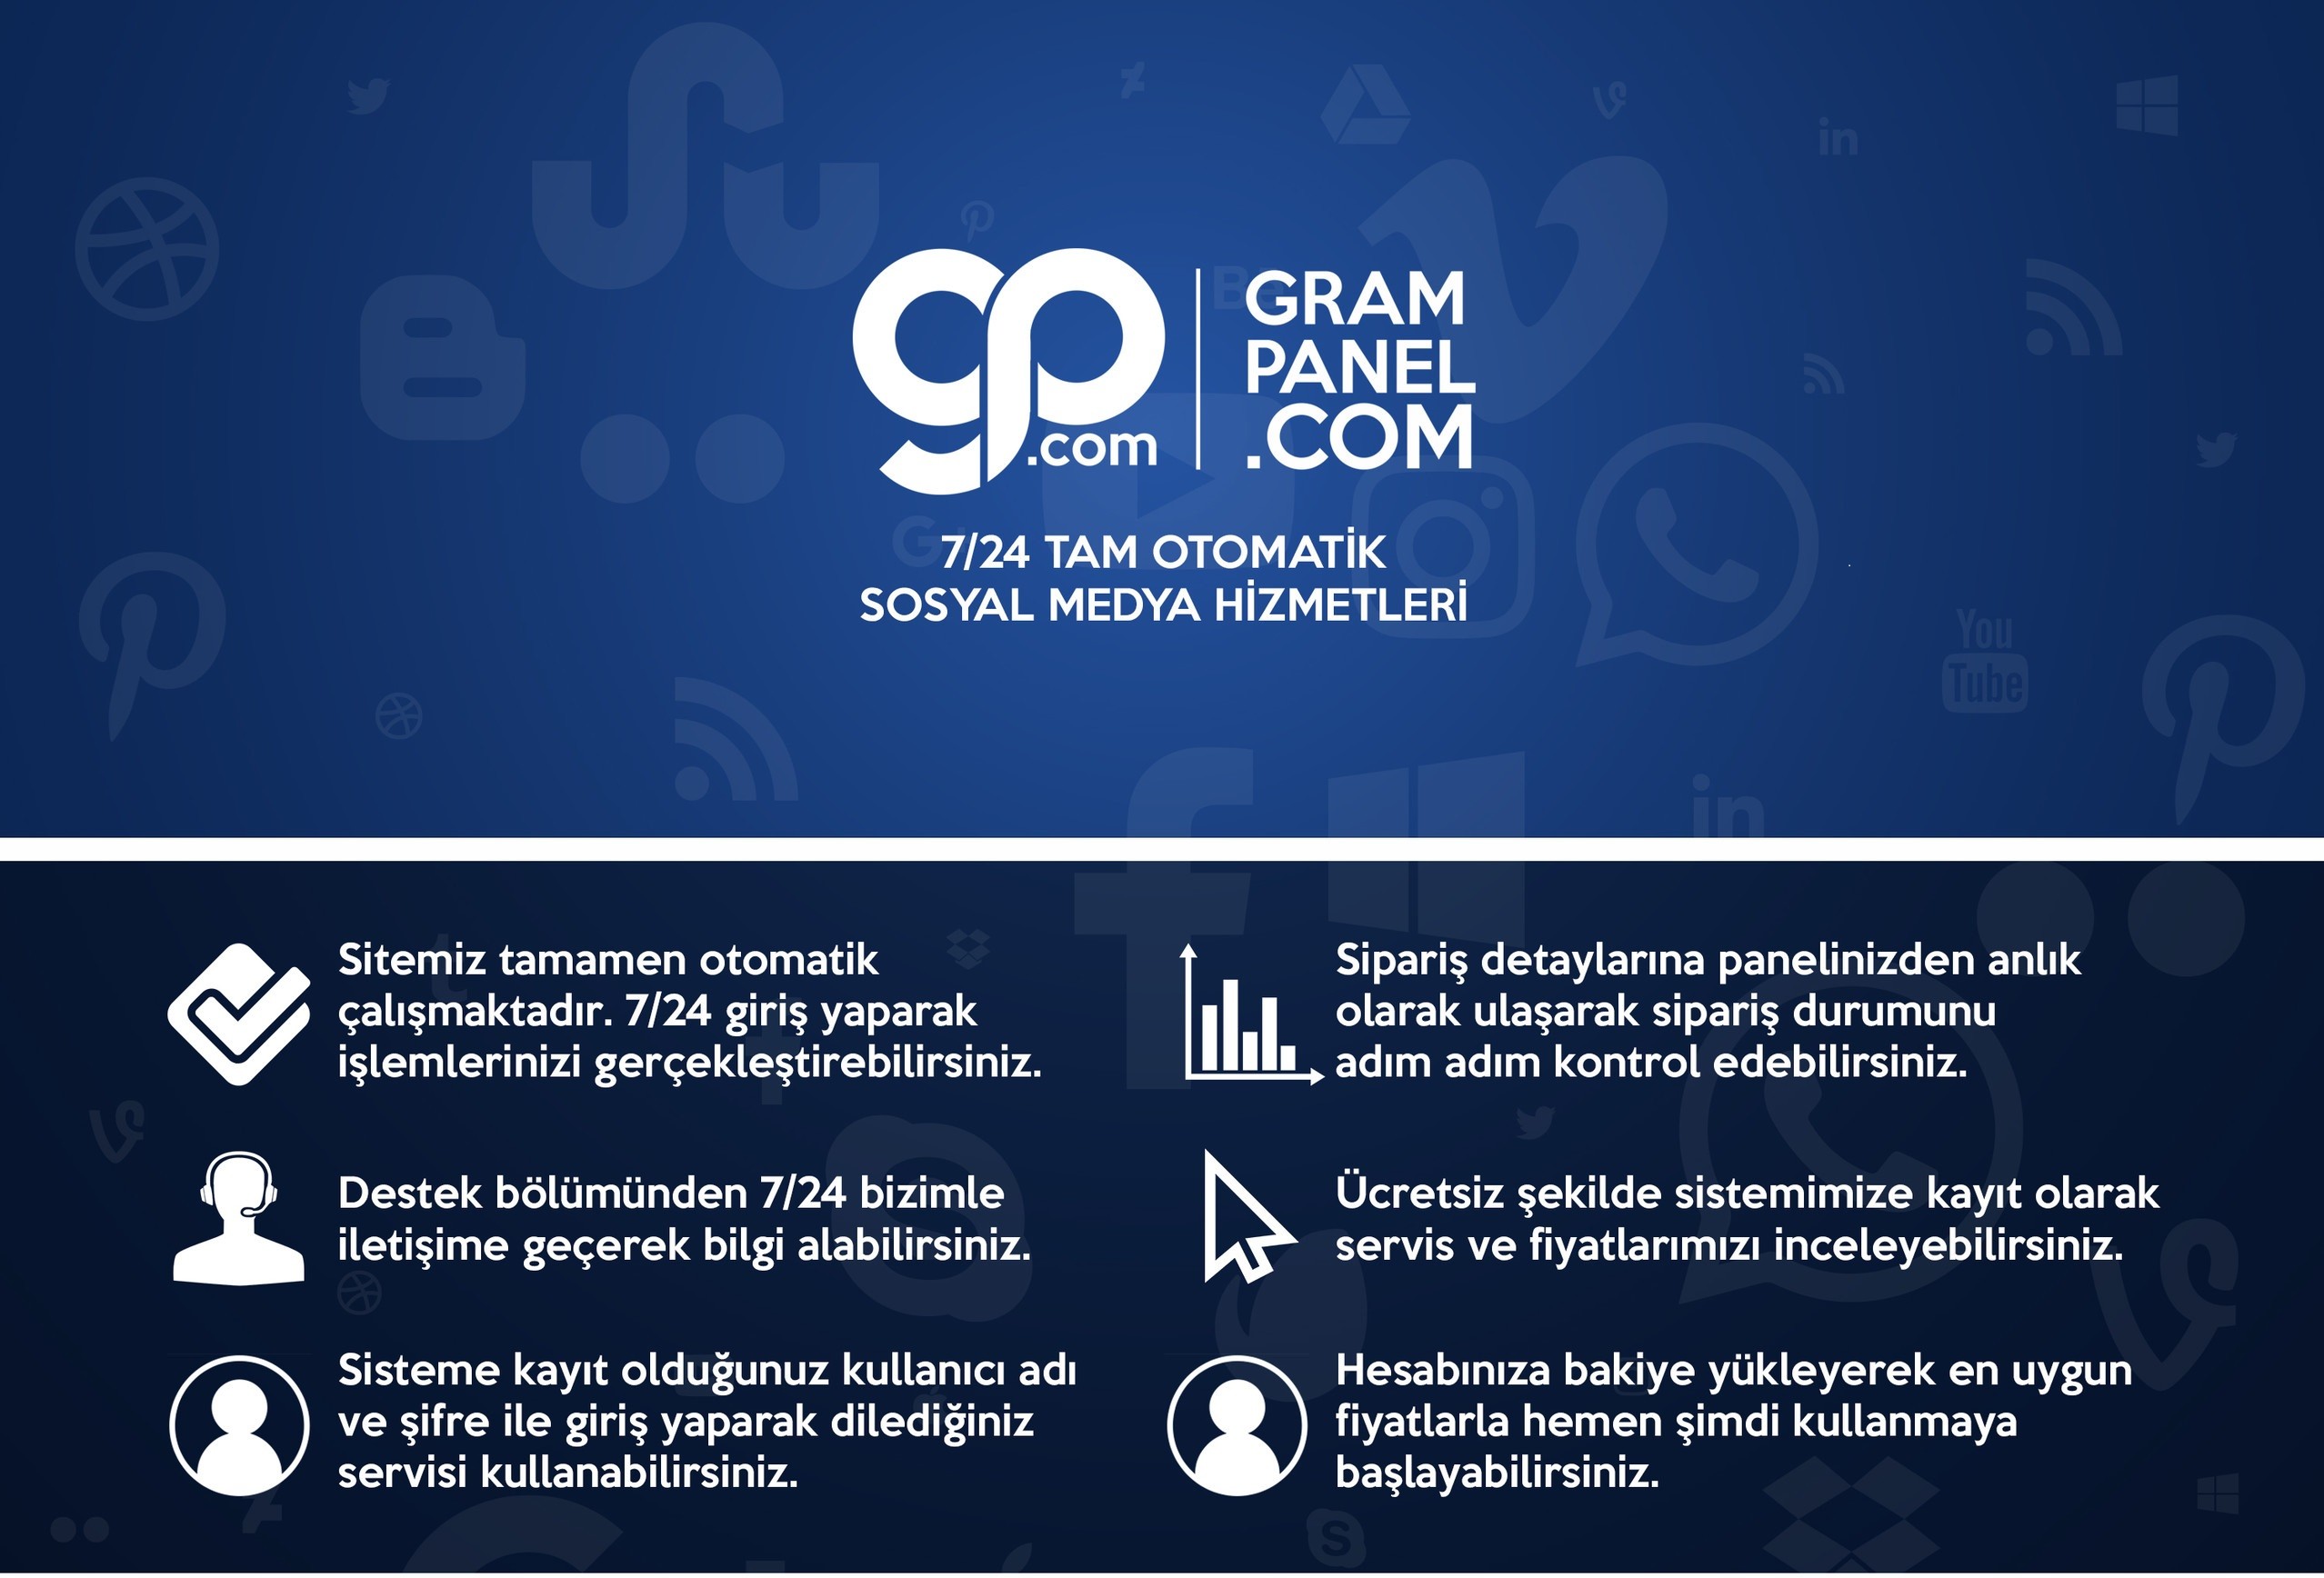 grampanel.com ' Tam Otomatik Panel '